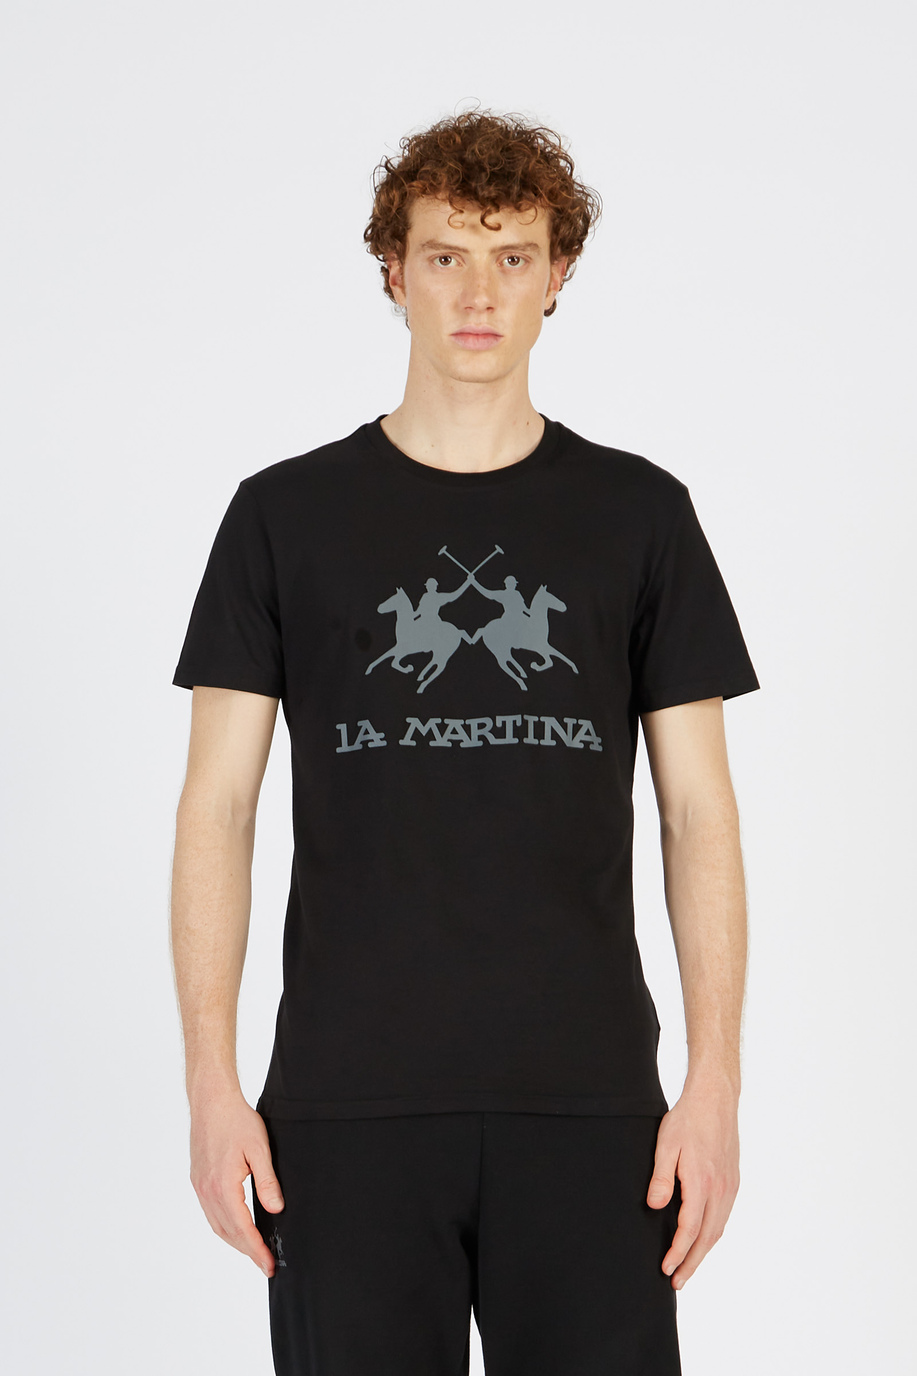 Regular fit T-Shirt Herren - Essential | La Martina - Official Online Shop